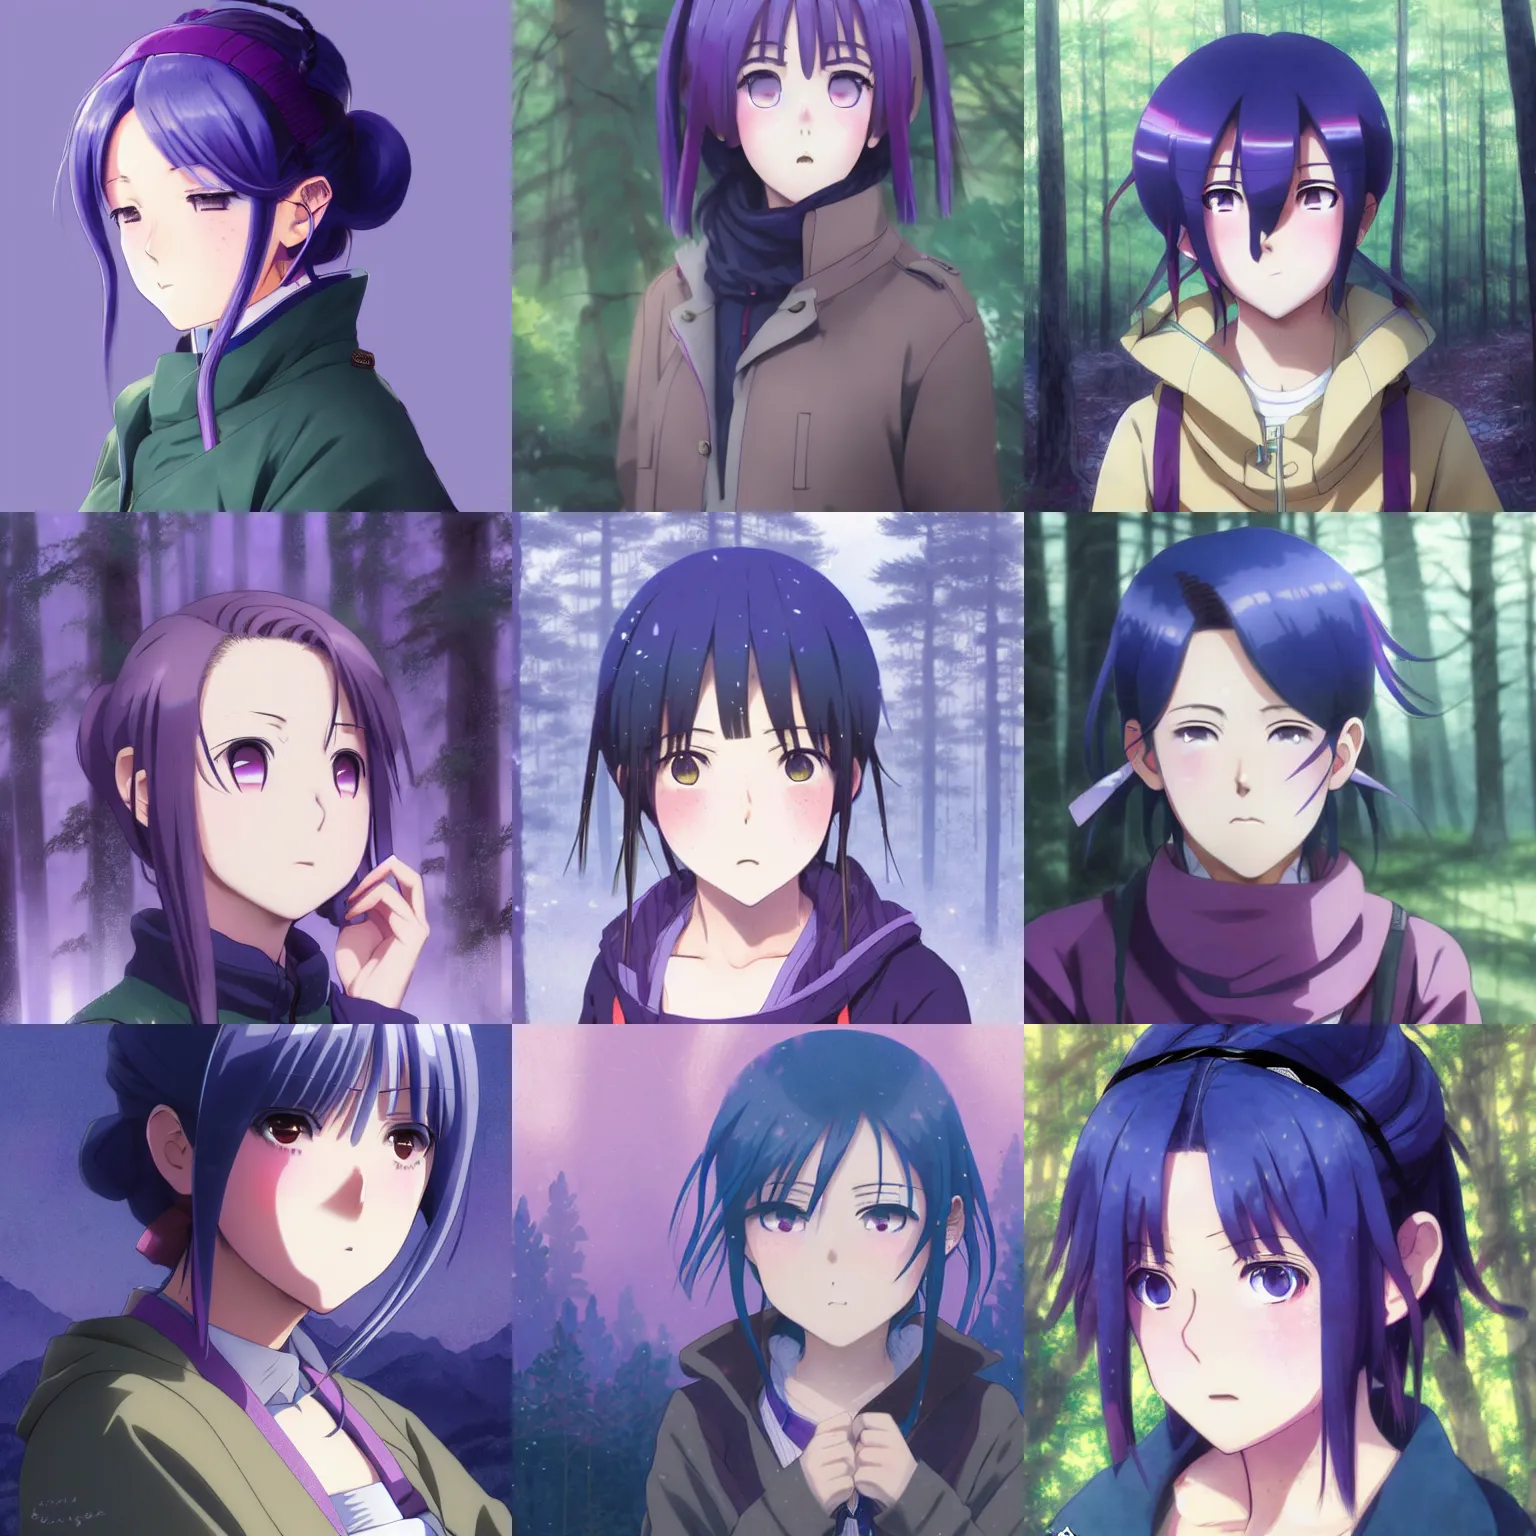 Prompt: anime shima rin shimarin yuru camp dark - blue hair tied in a high bun purple violet eyes portrait by greg rutkowski forest background